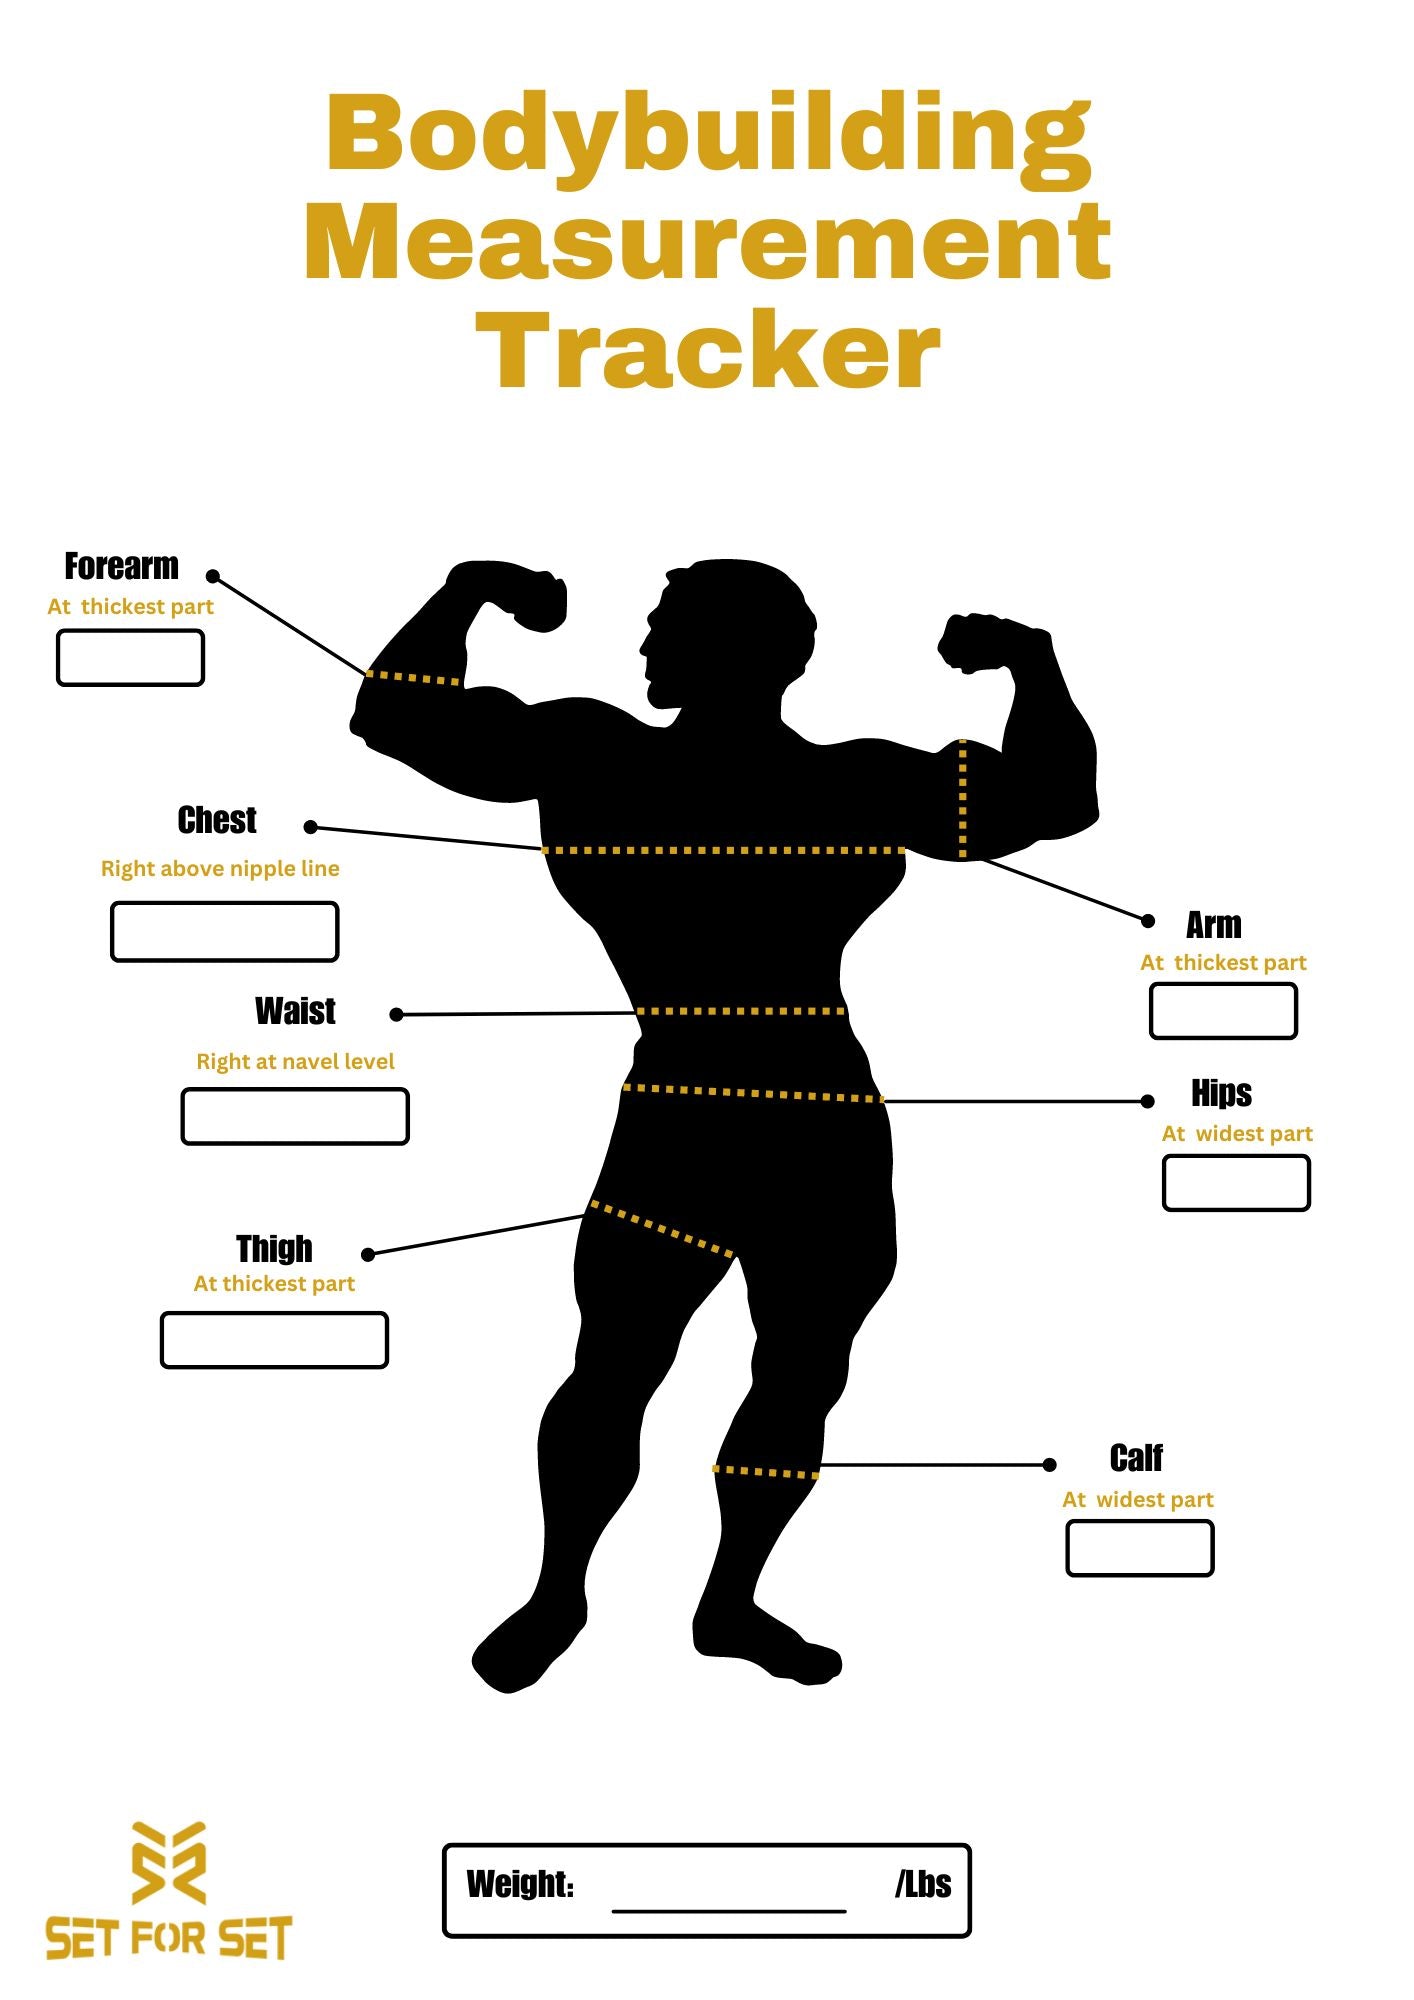 Bodybuilding Measurement Tracker